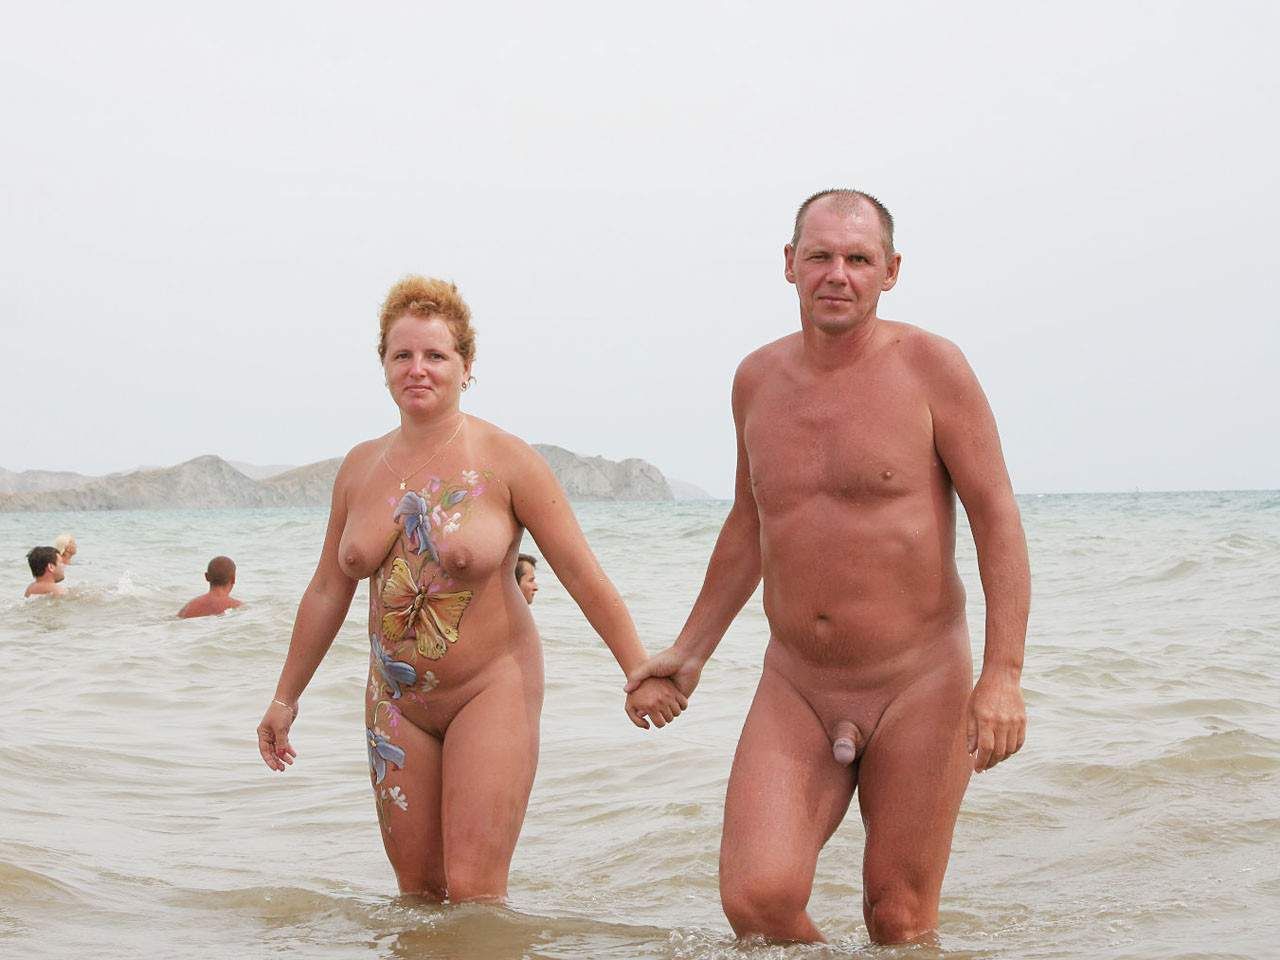 https://www.nudismlife.com/galleries/nudists_and_nude/nudists_couple/nudists_nude_naturists_couple_1904.jpg